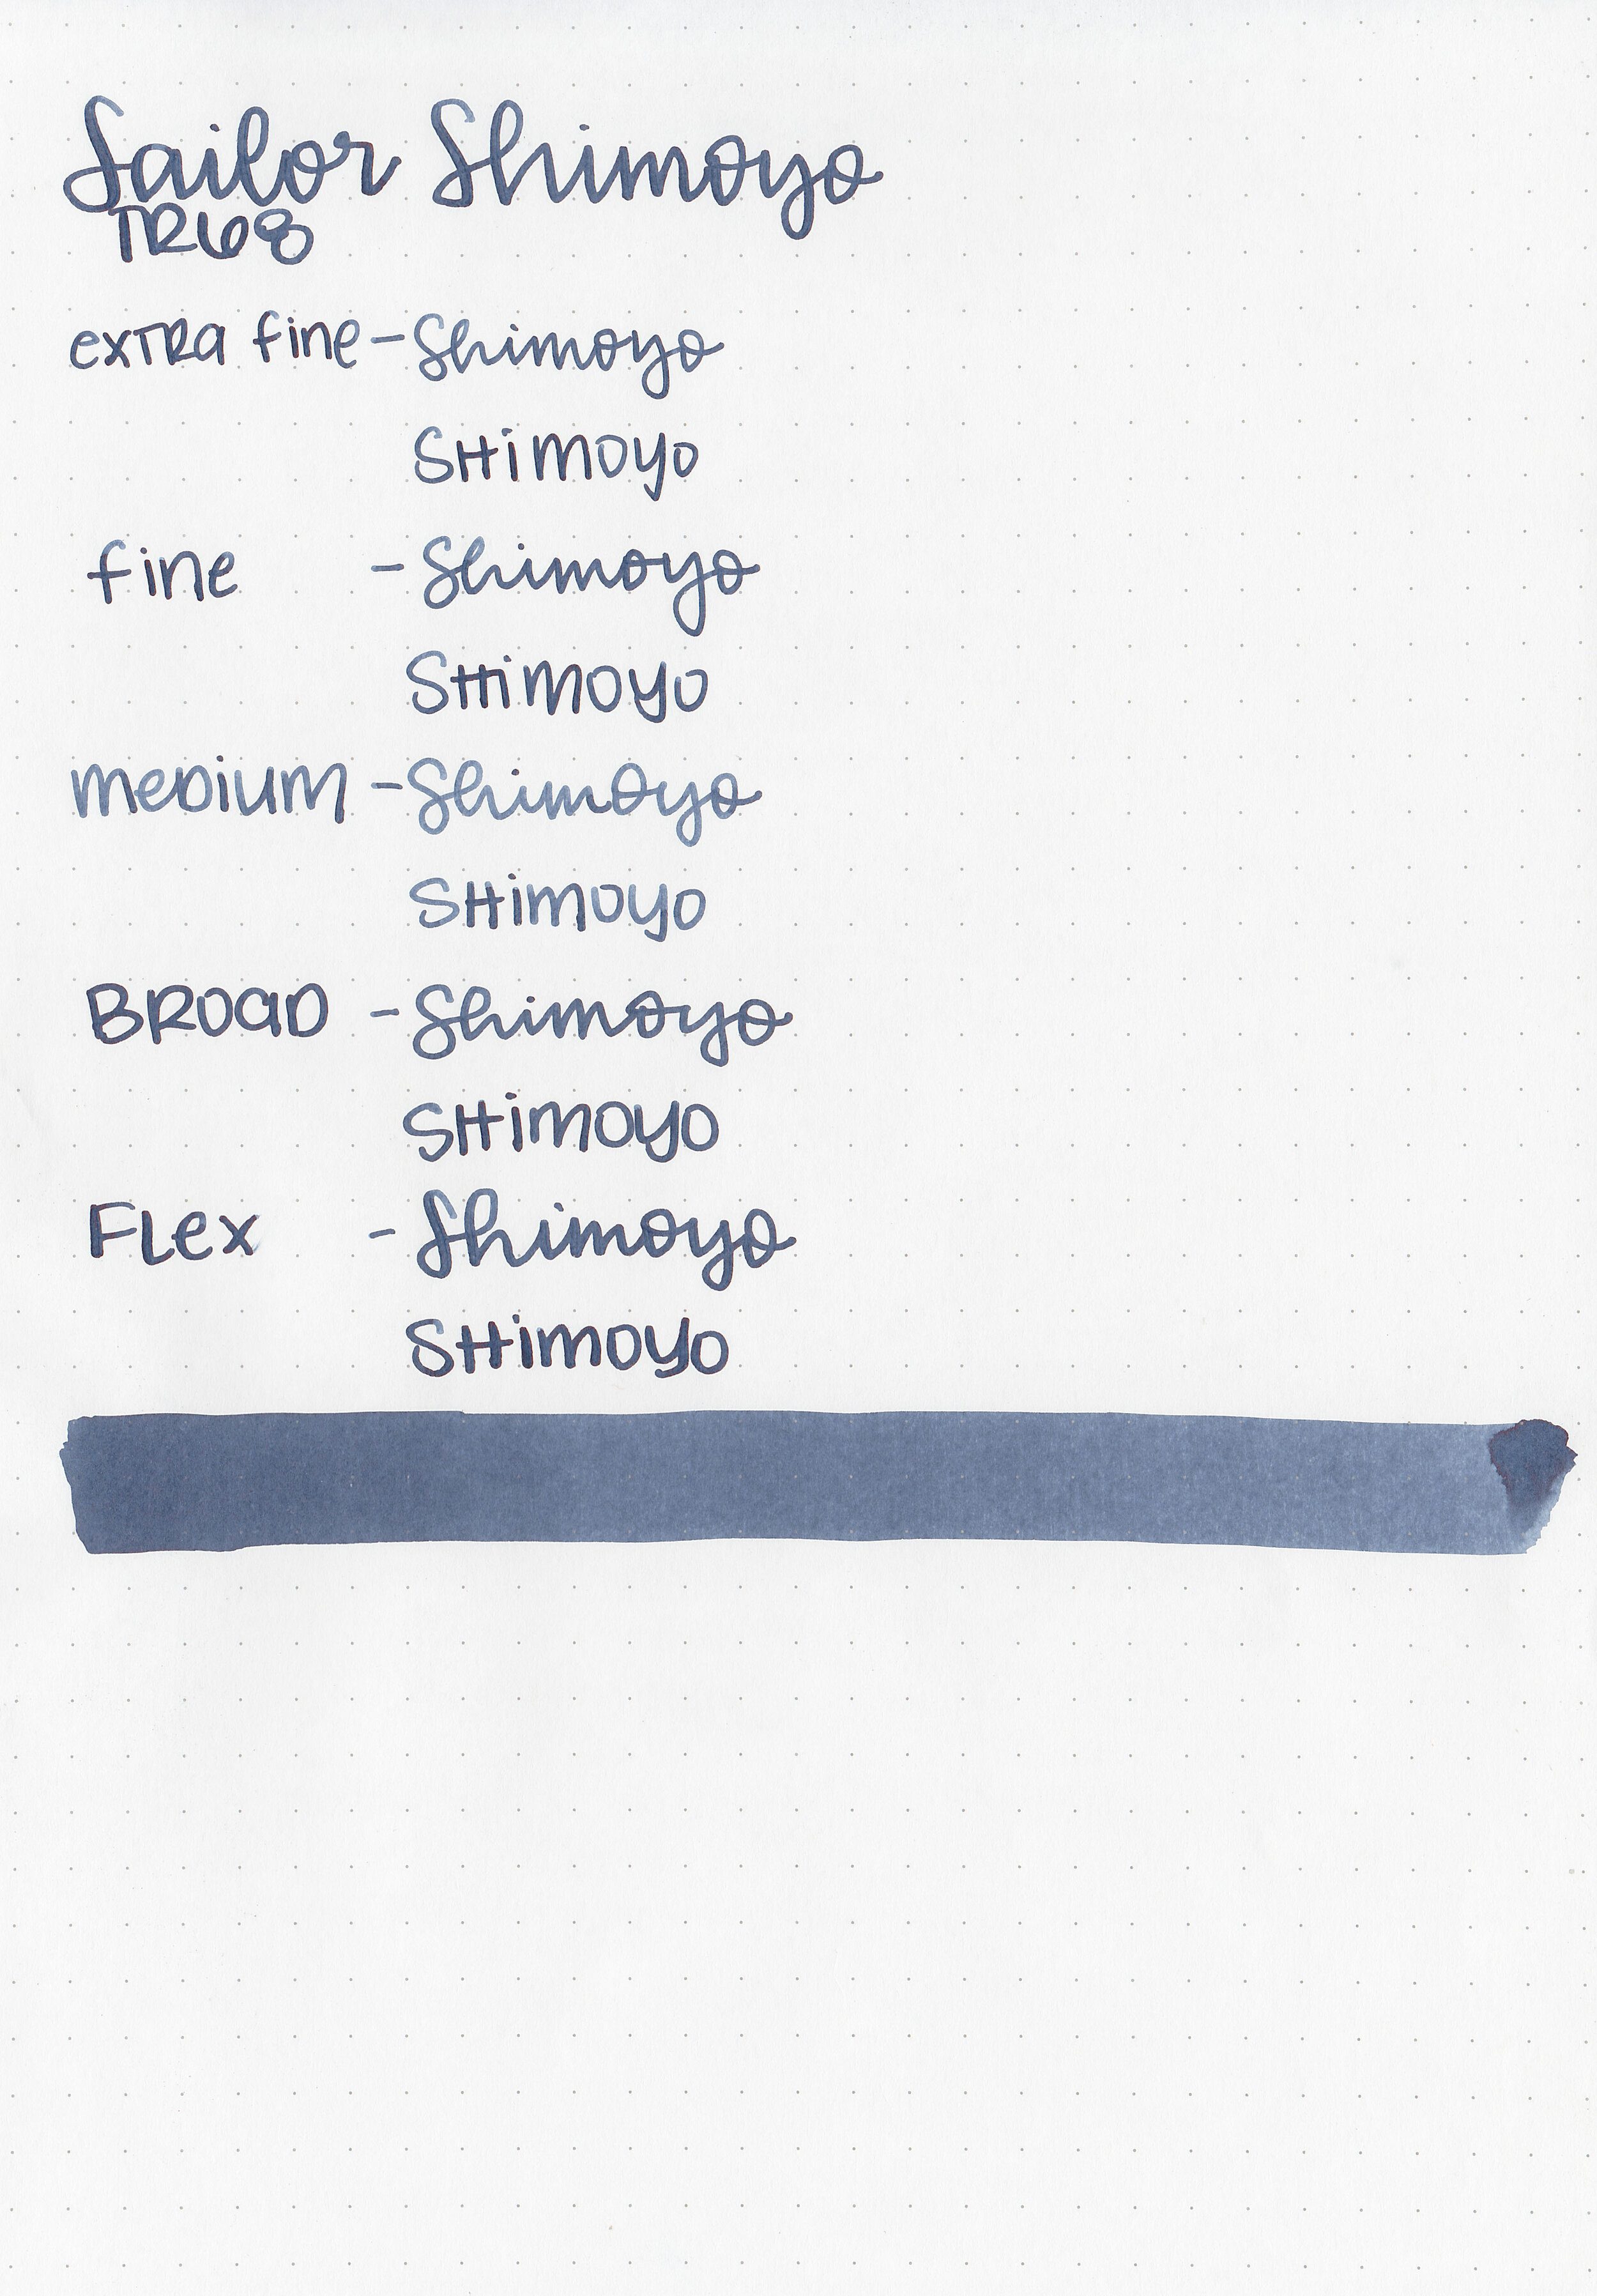 ss-shimoyo-7.jpg